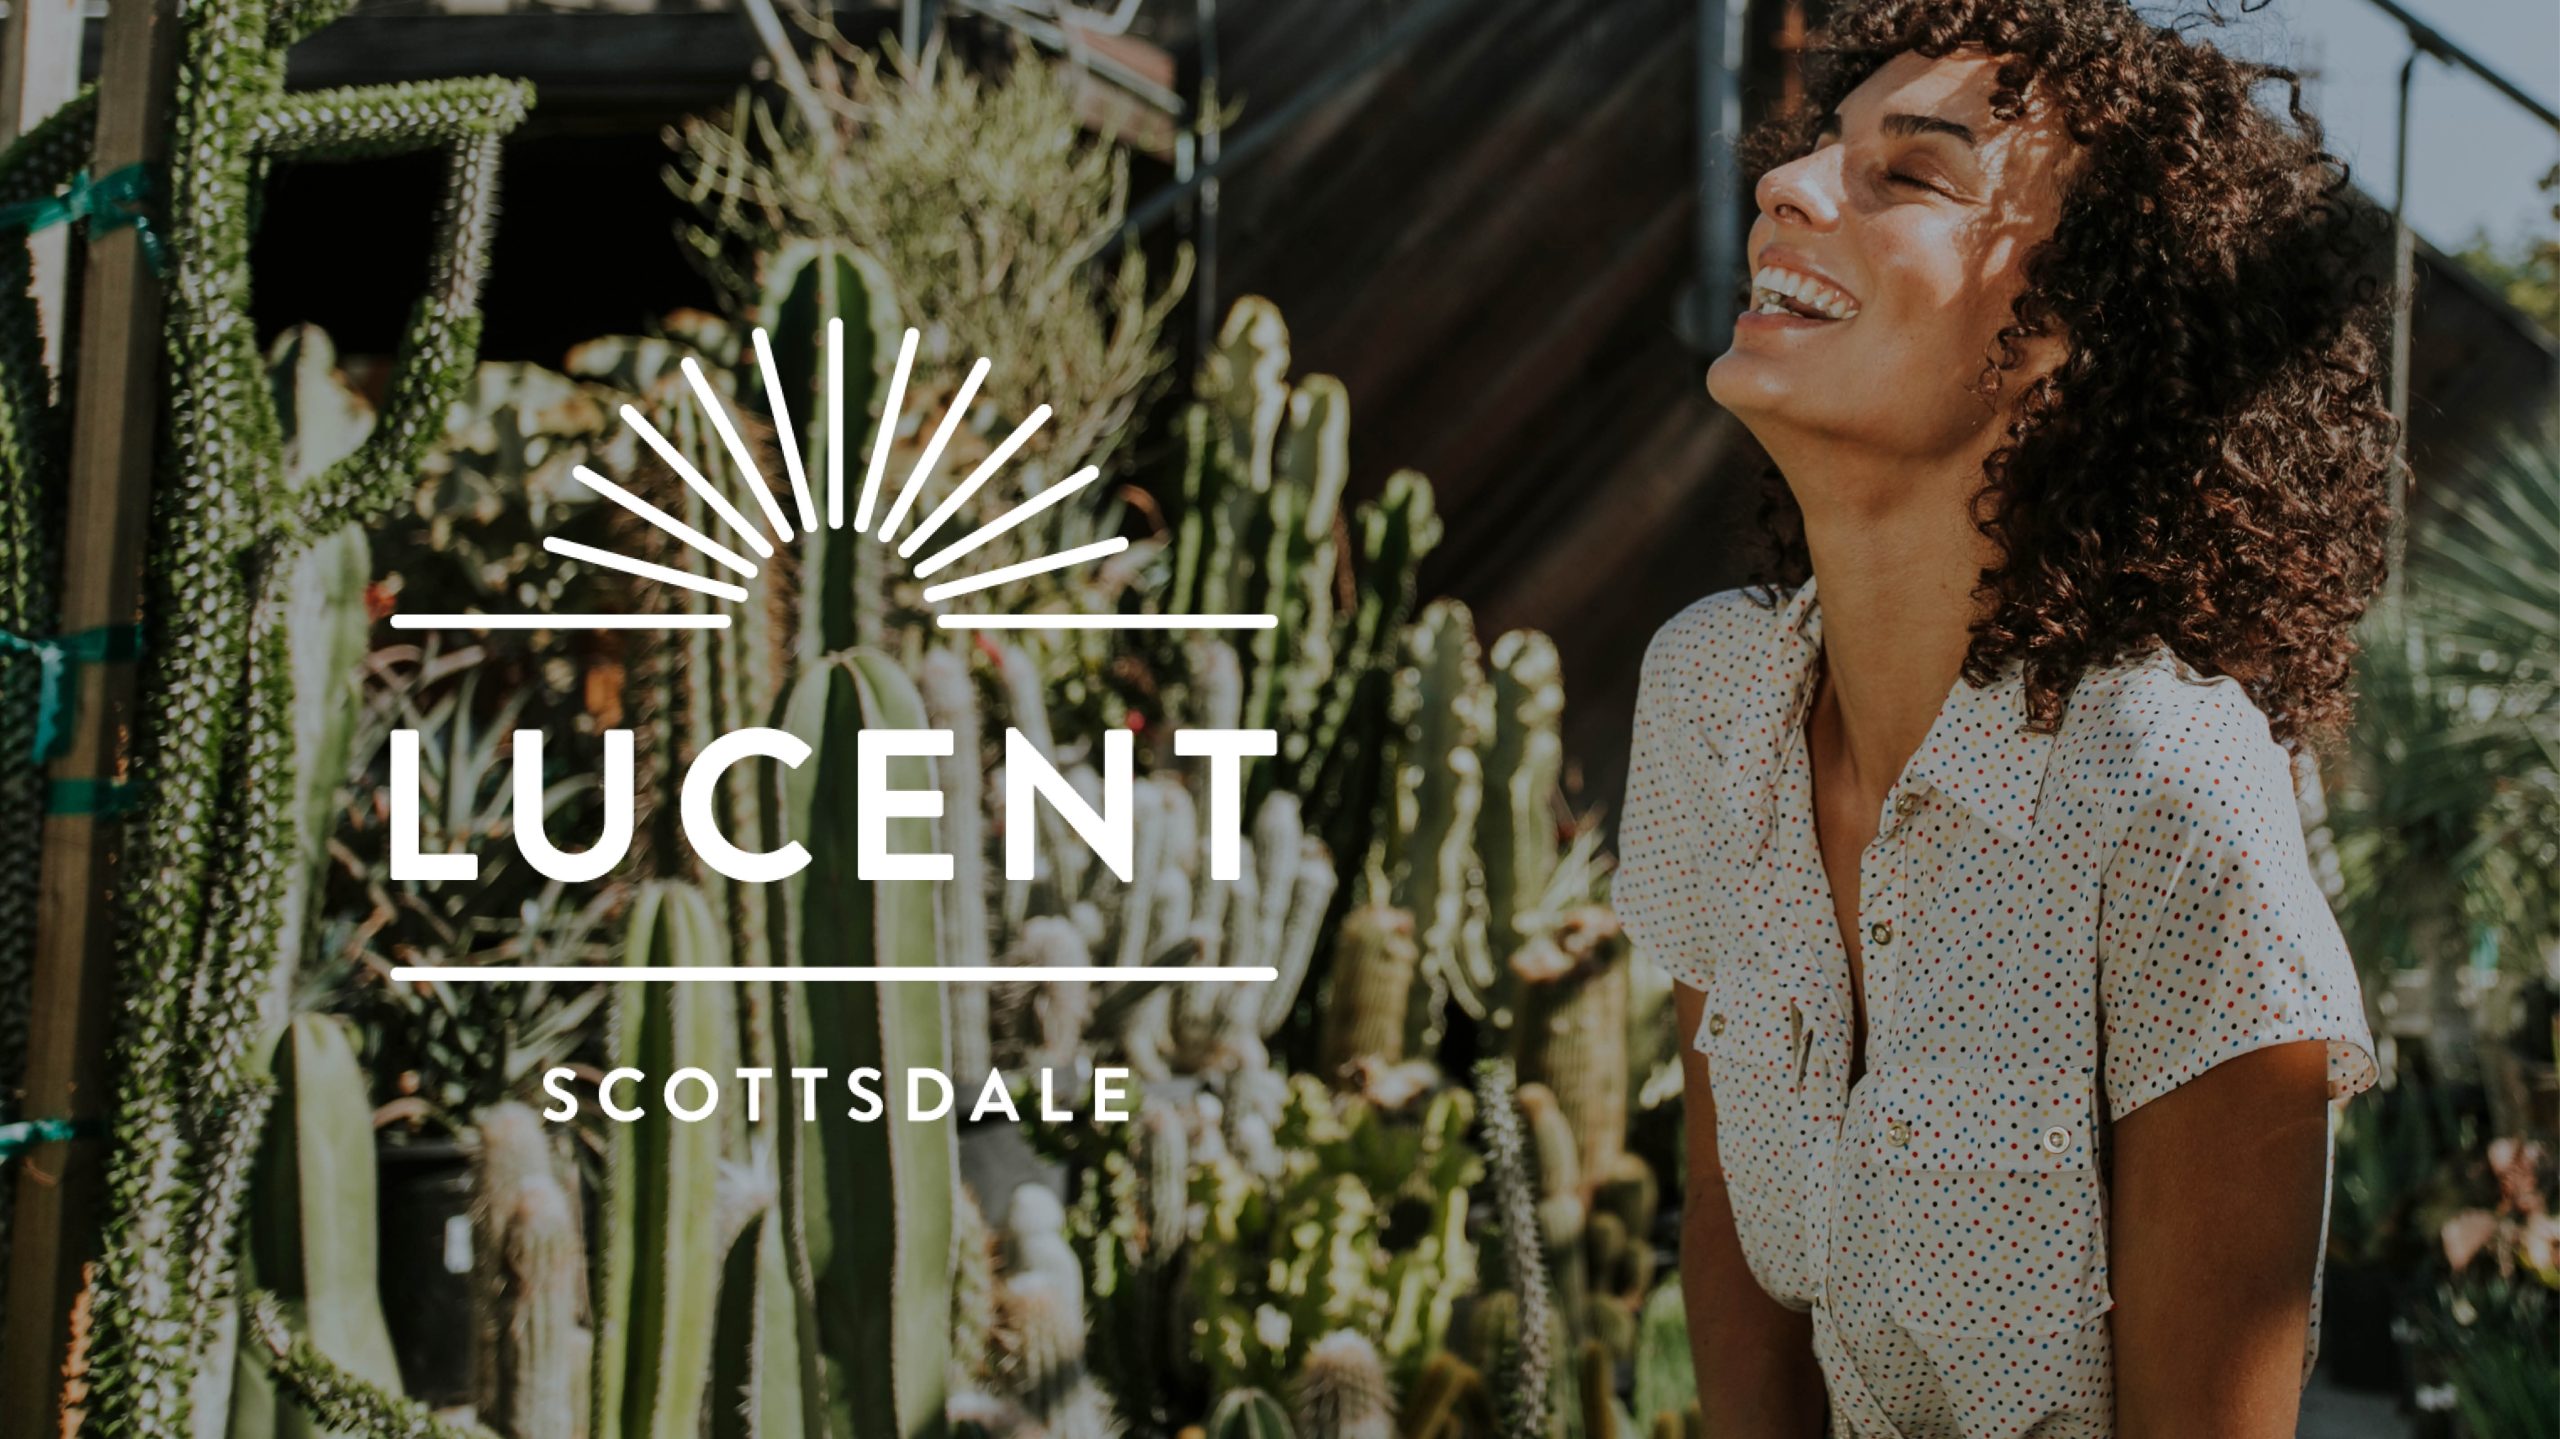 Lucent Scottsdale